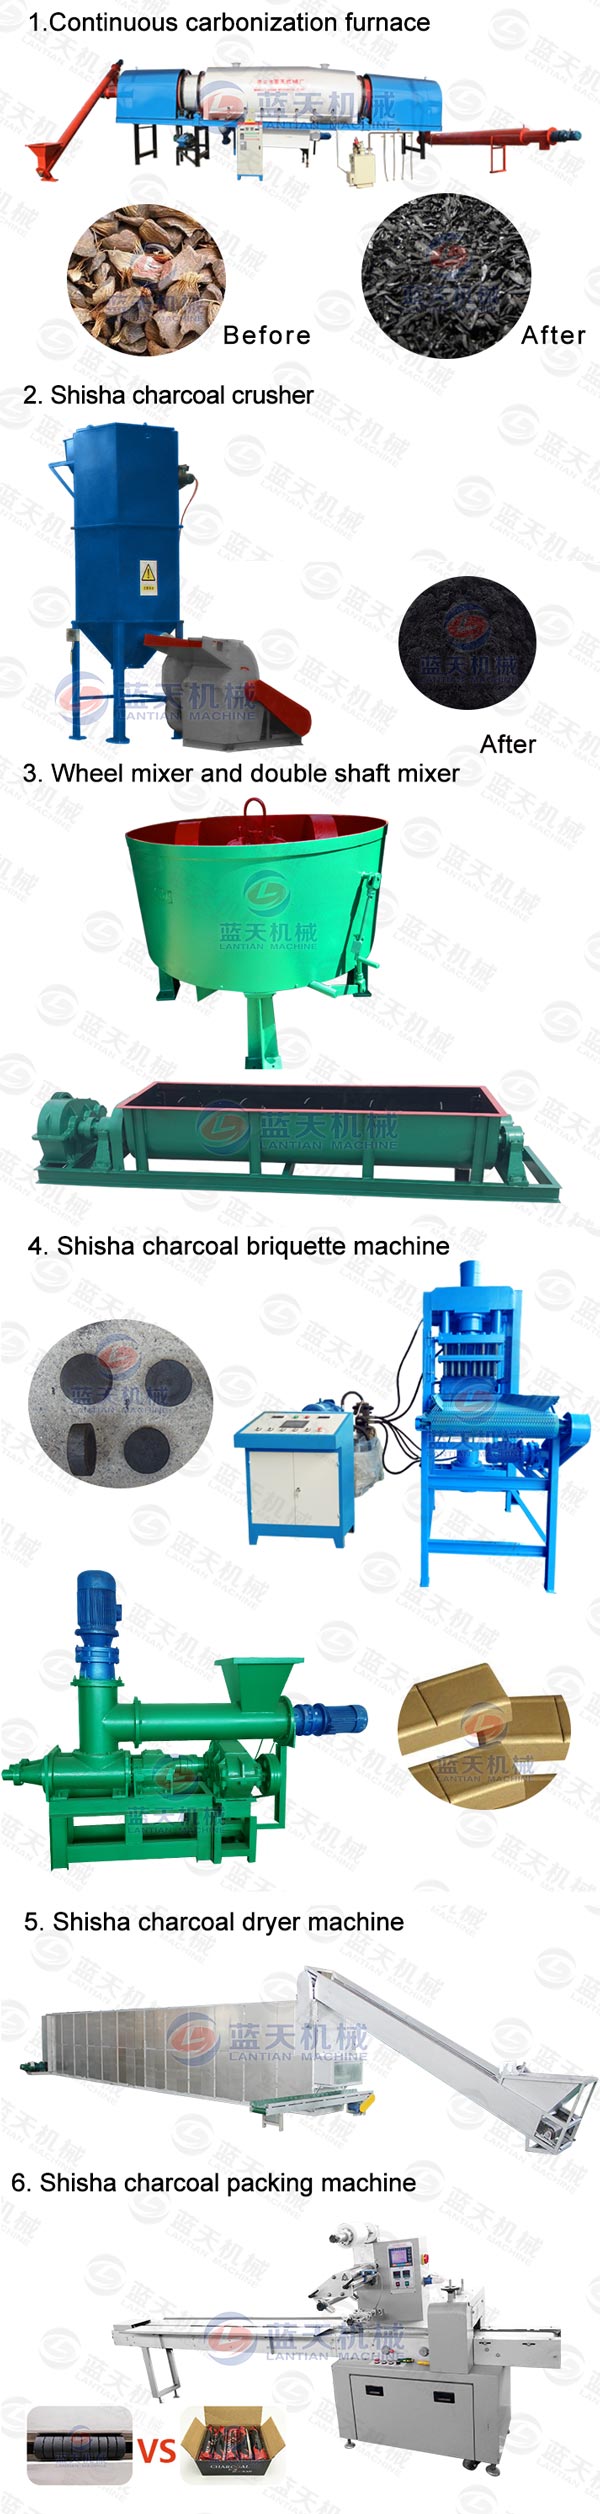 Product Line of Shisha Charcoal Packing Machine